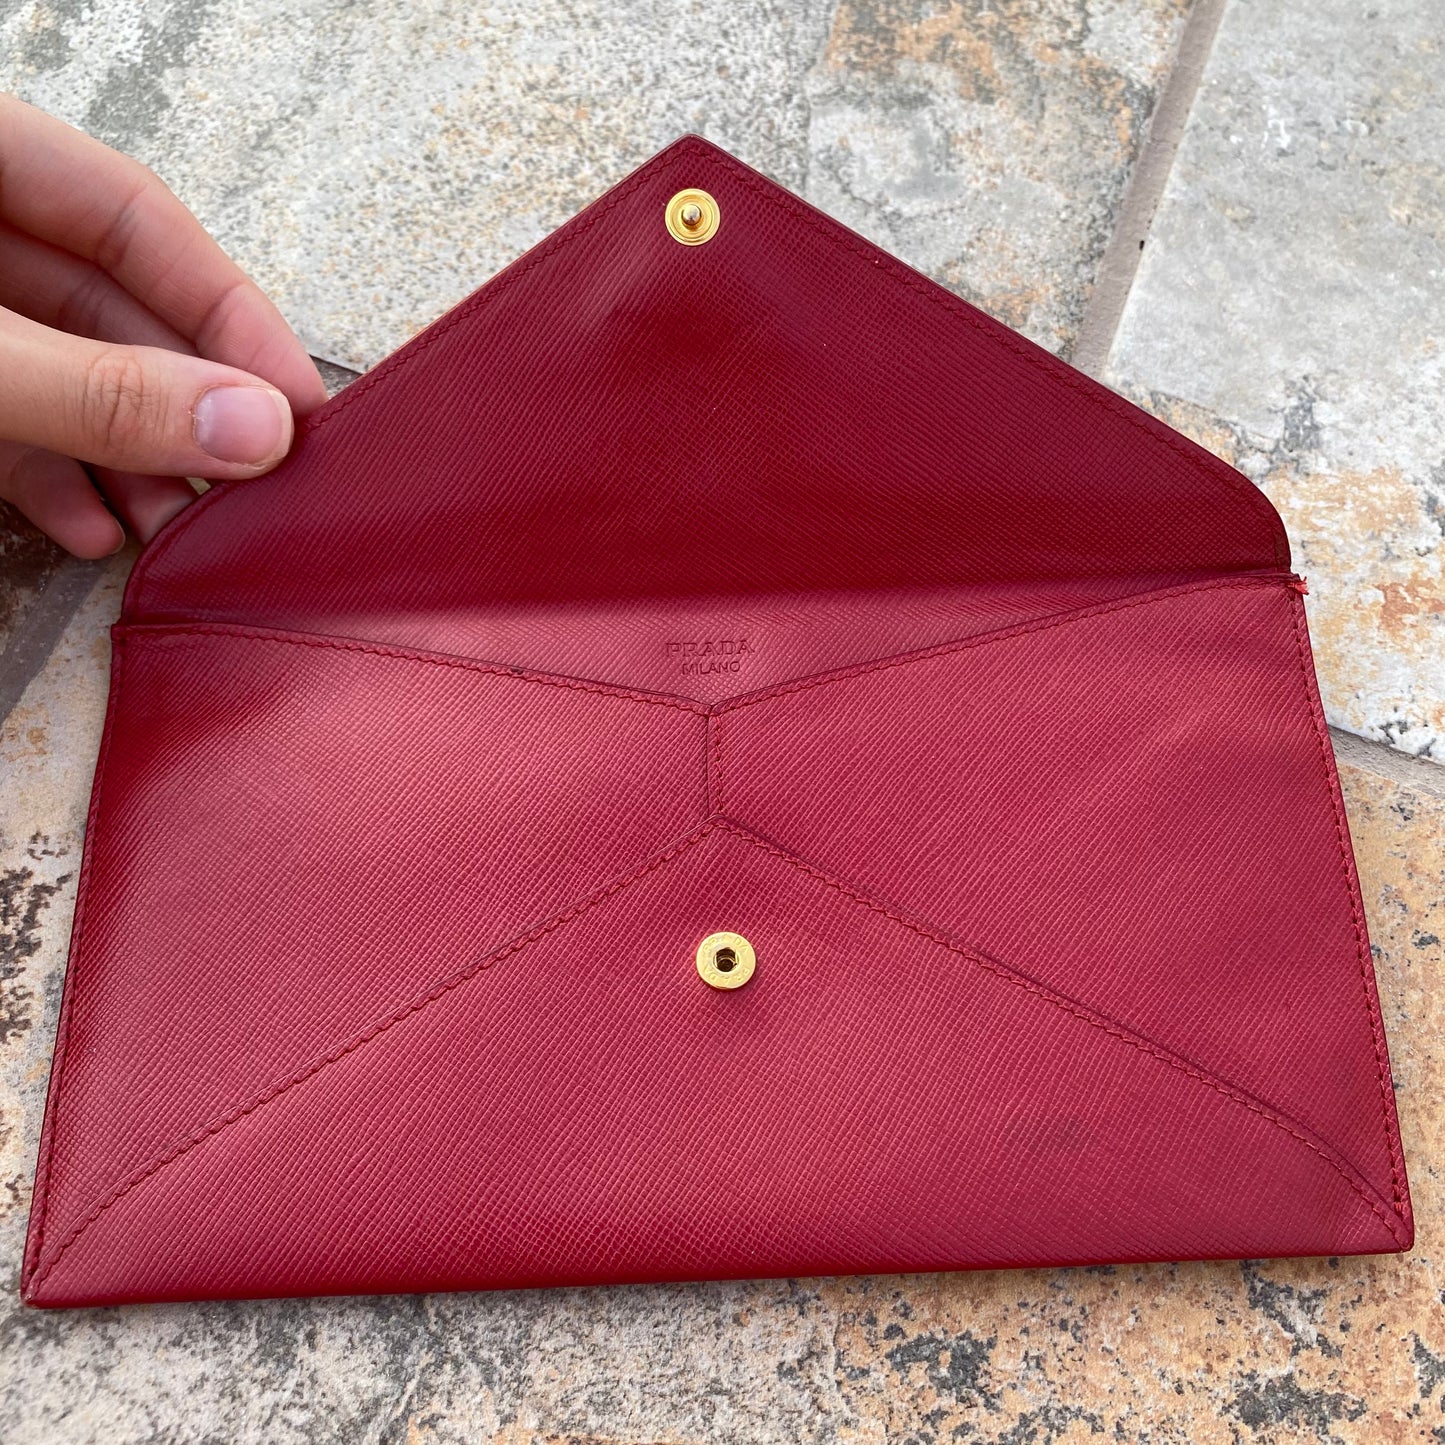 Prada Saffiano Leather Envelope Wallet